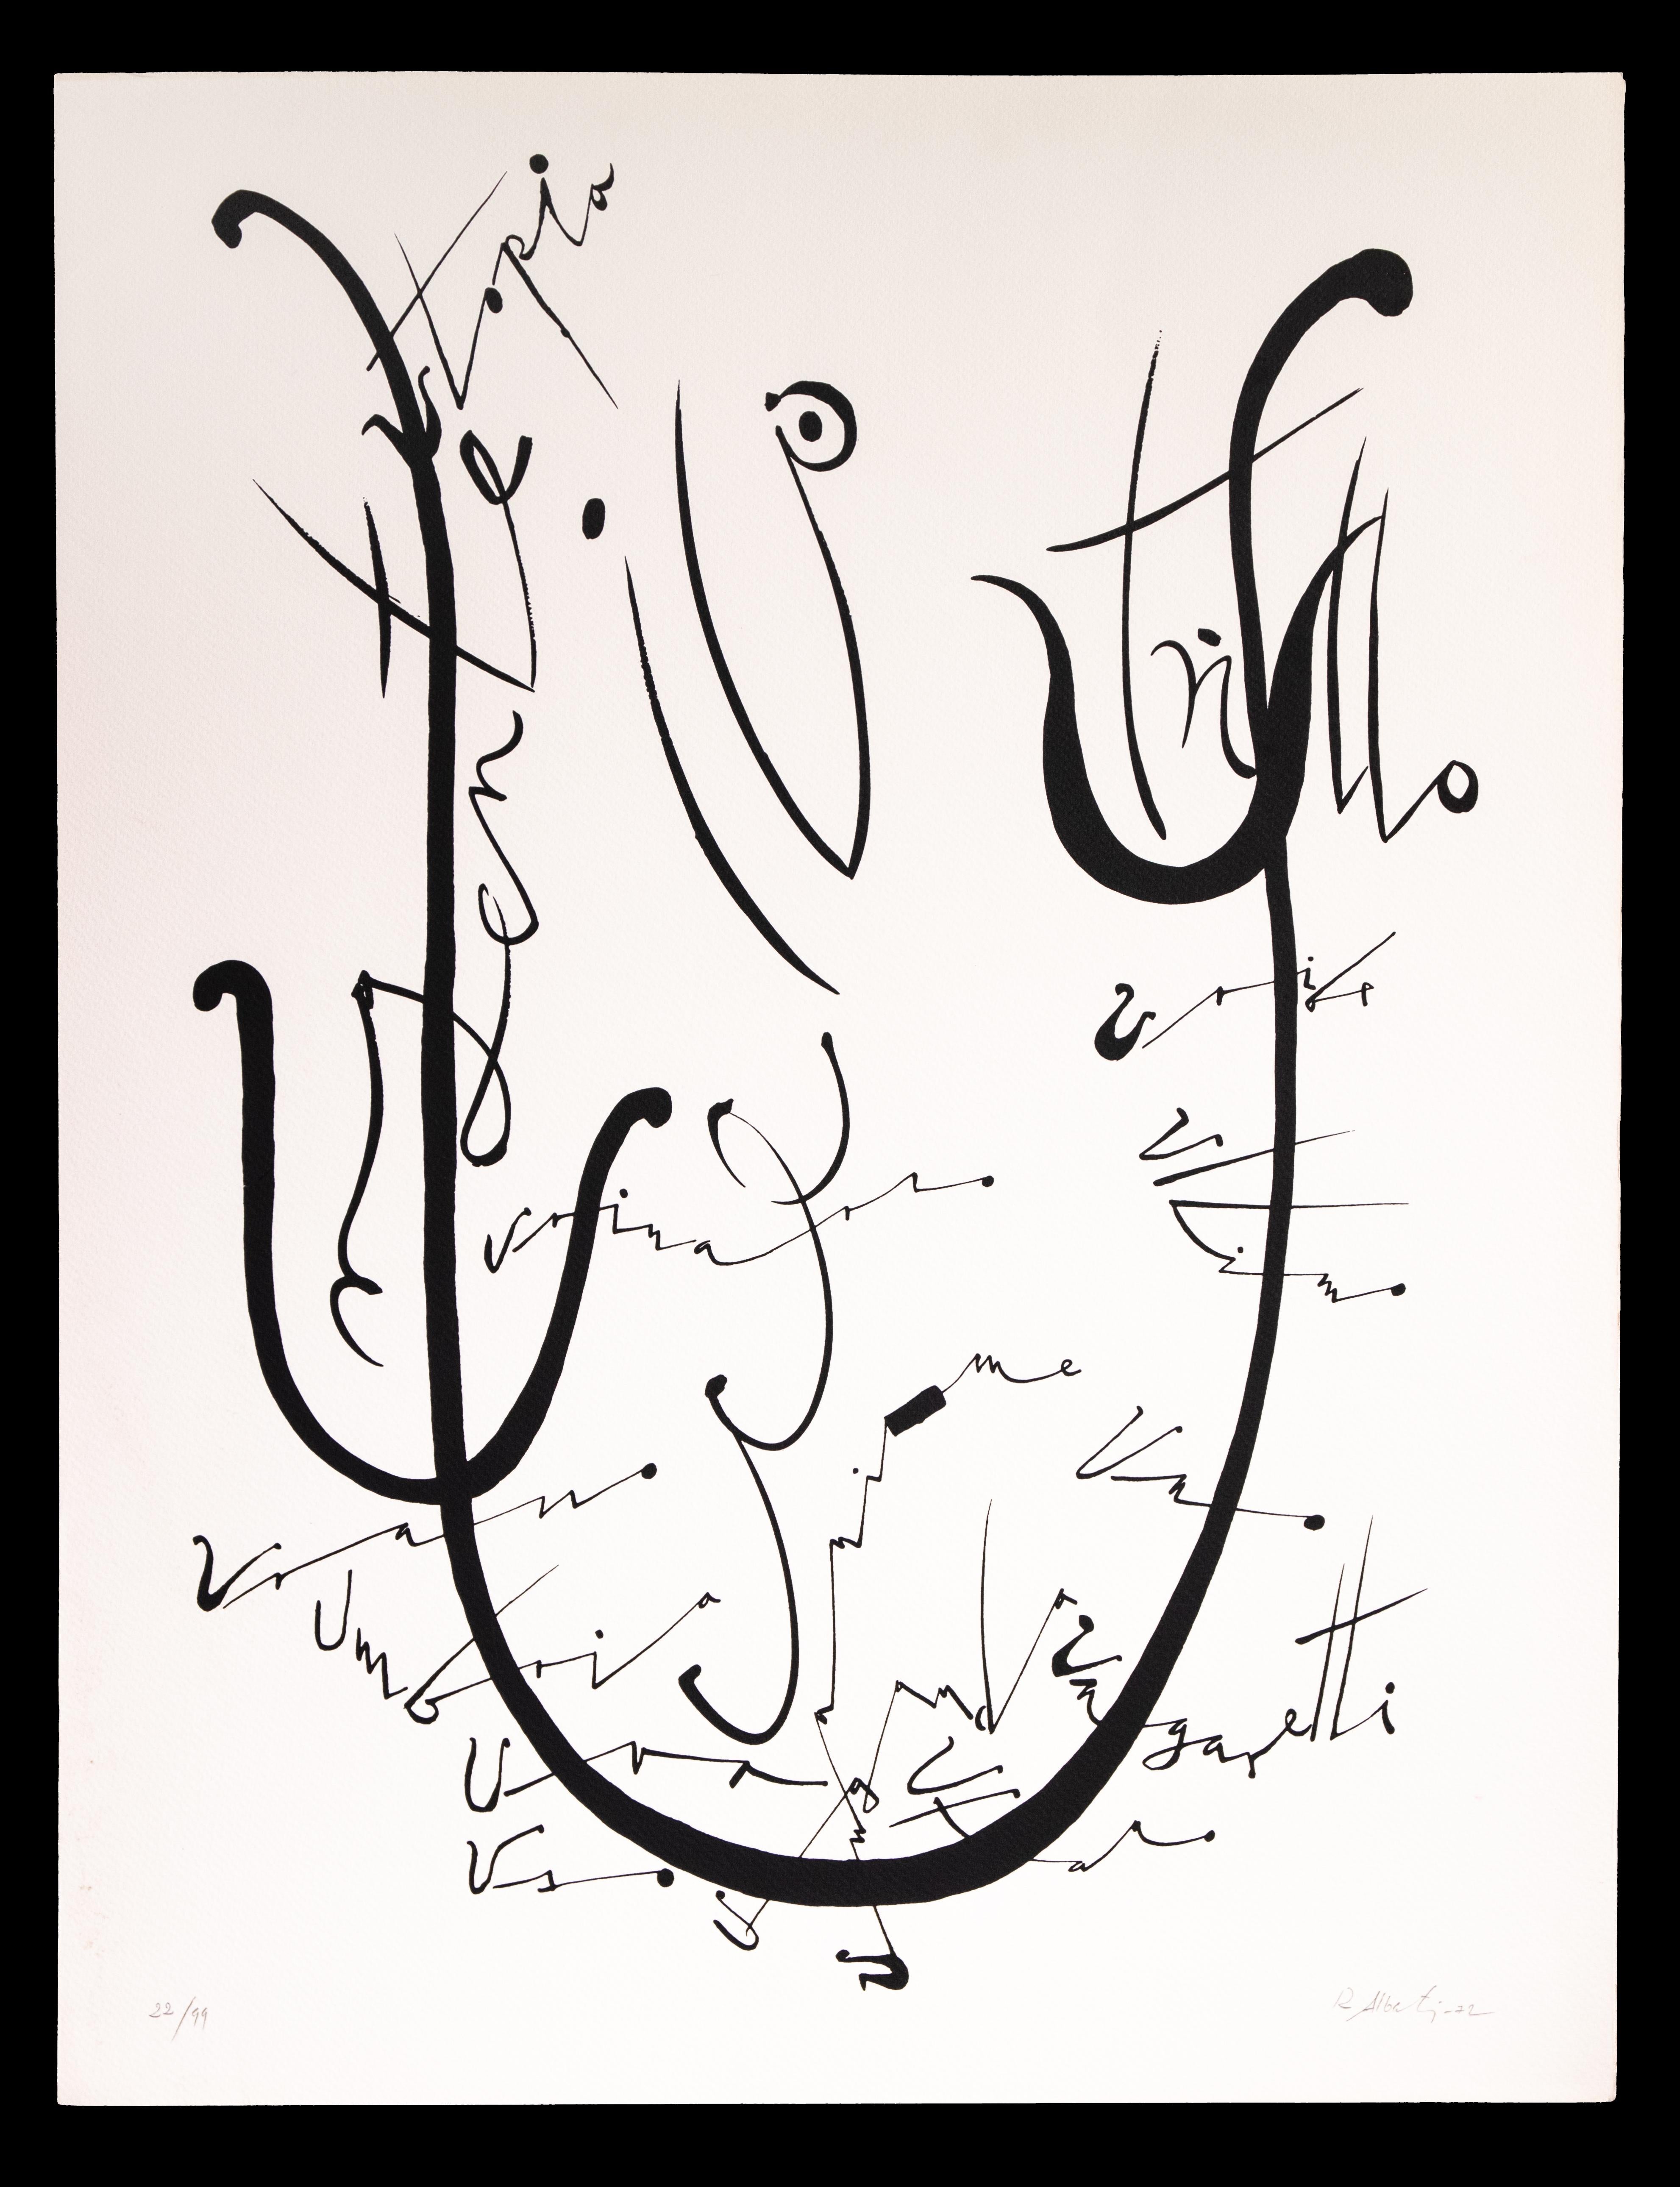 Rafael Alberti Abstract Print - Letter U - Original Lithograph by Raphael Alberti - 1972